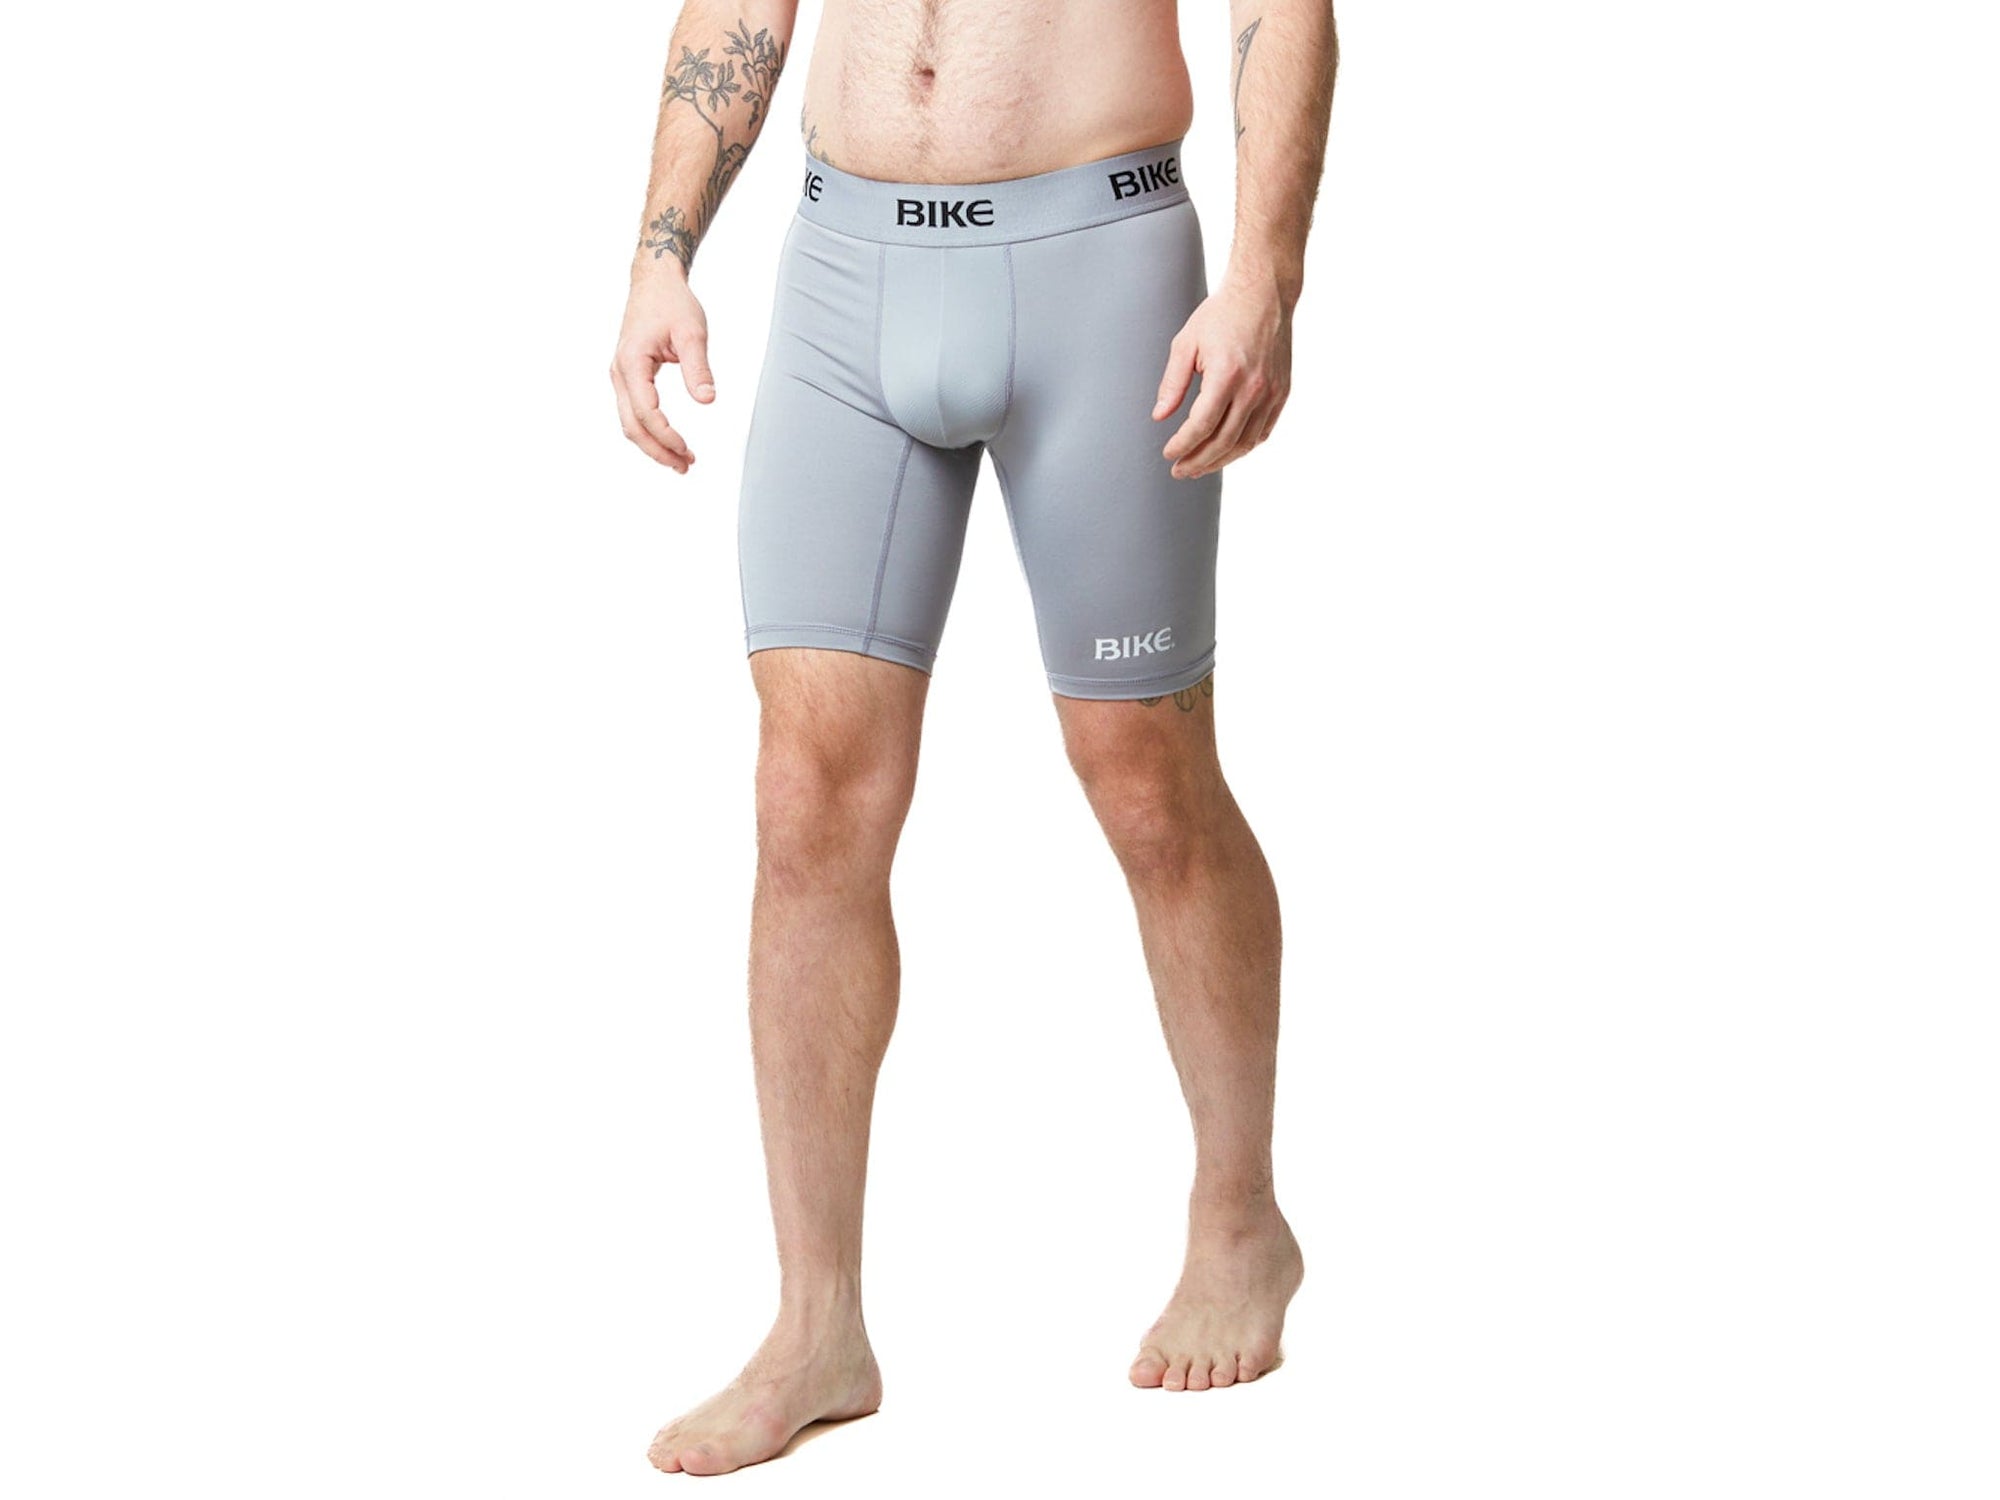 Gray BIKE® compression shorts